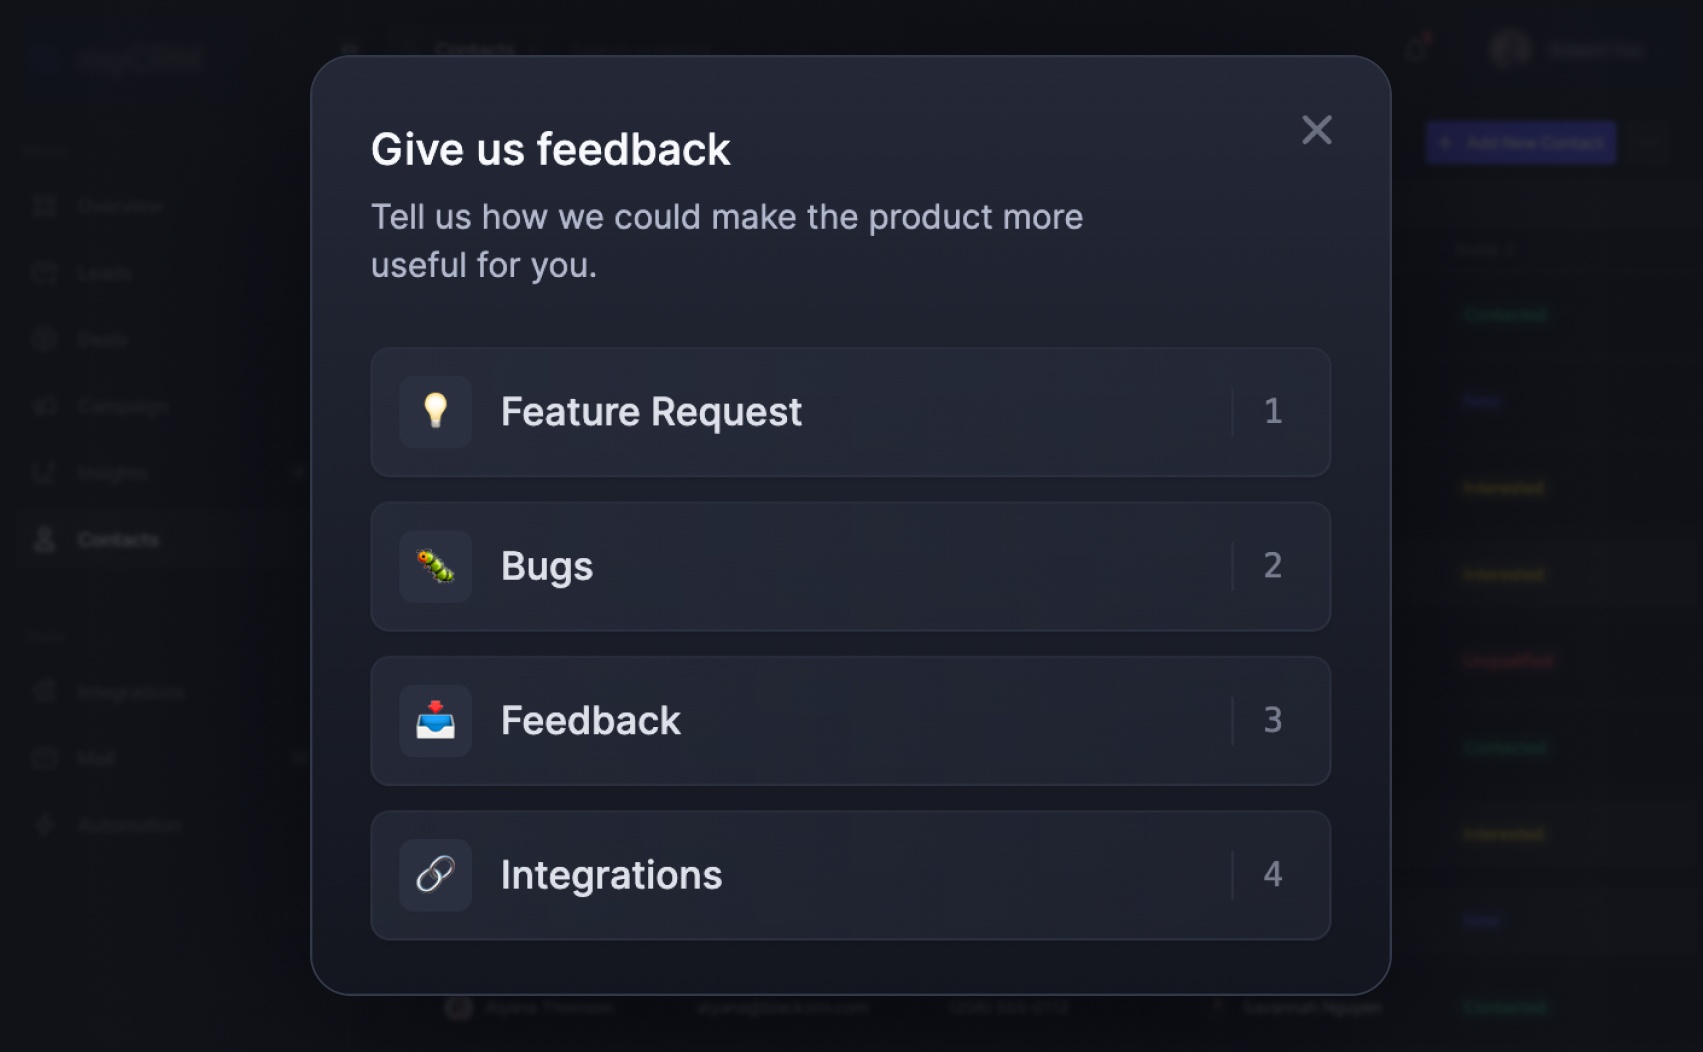 Featurebase feedback widget